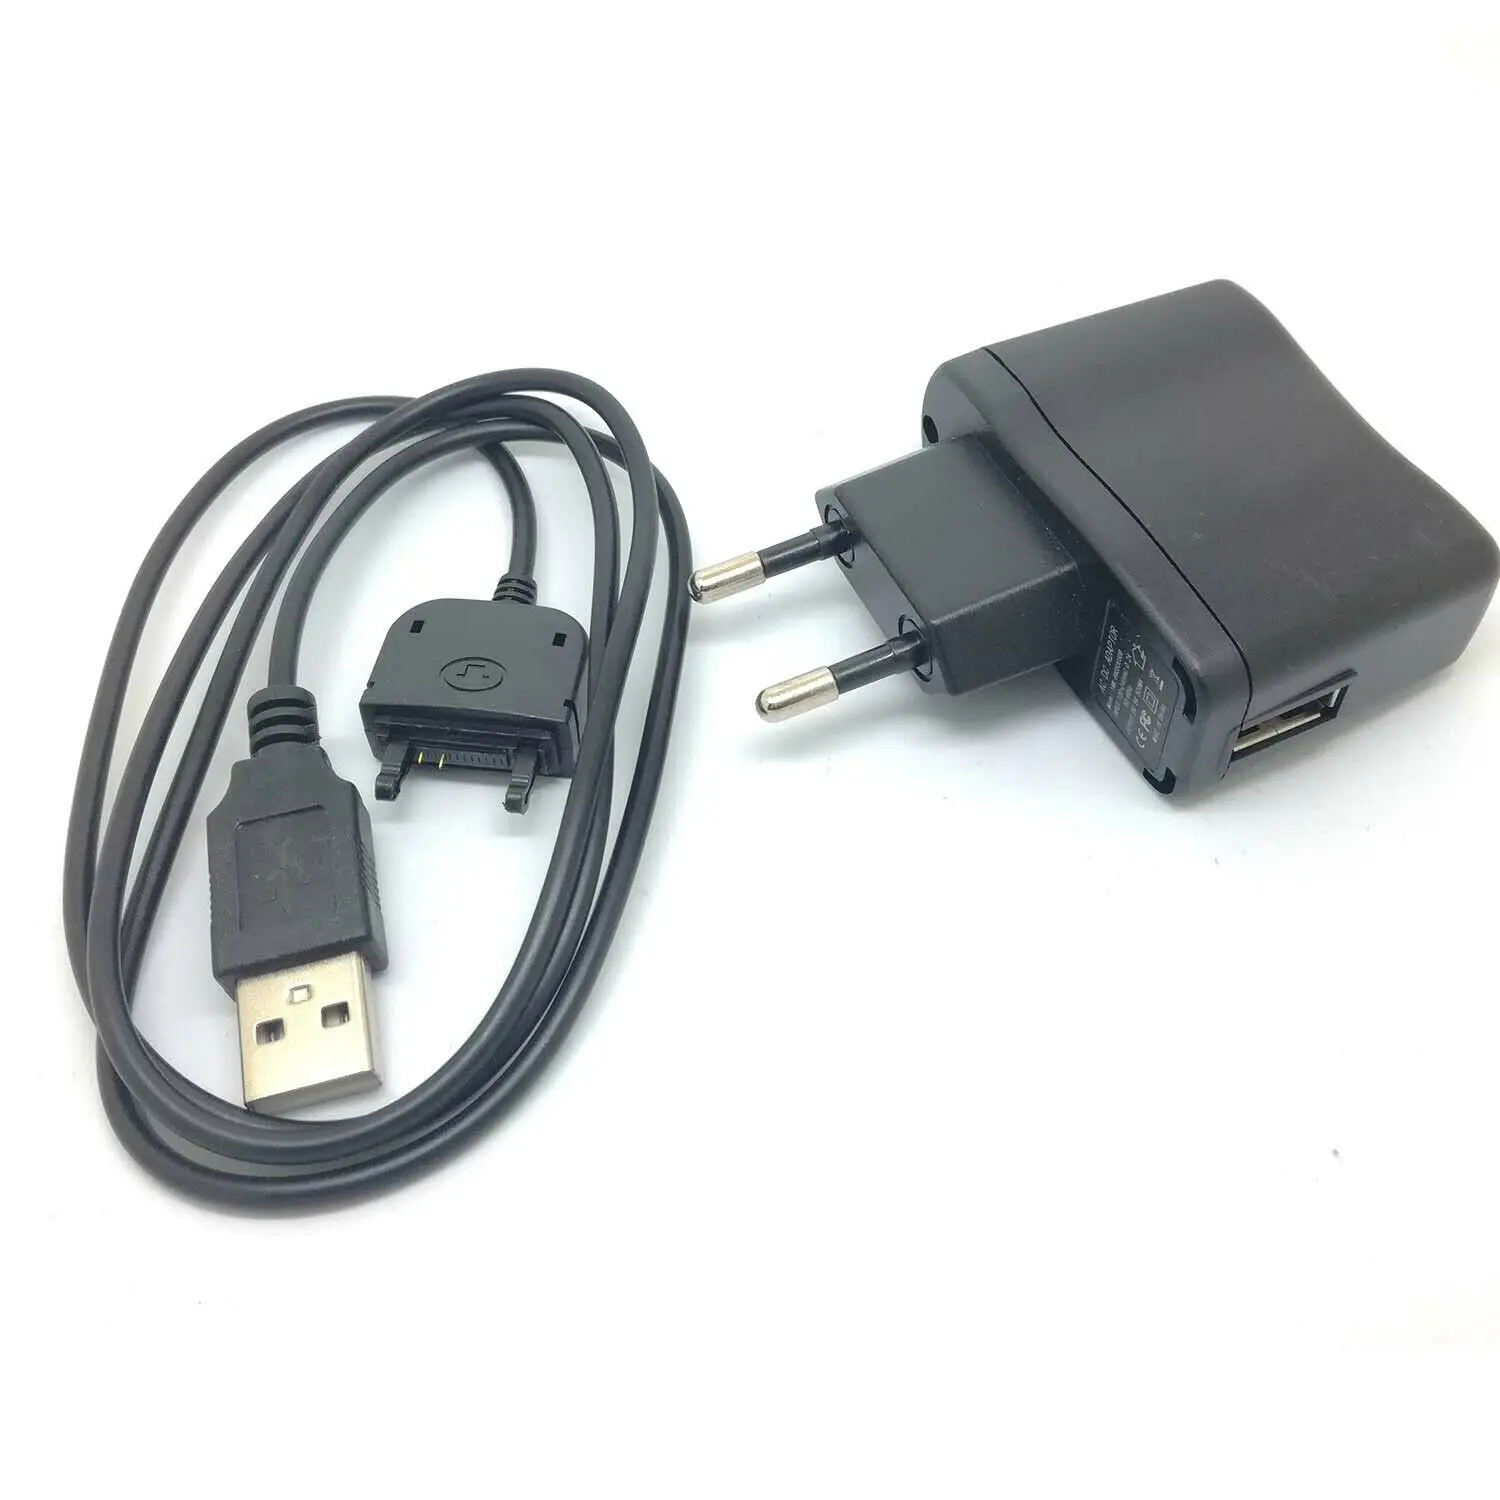 Настенное зарядное устройство USB зарядное устройство для sony Ericsson W810 W810i W830 W830i W850 W850i W880 Z310 Z310i Z320 Z320i Z520 Z520i Z525